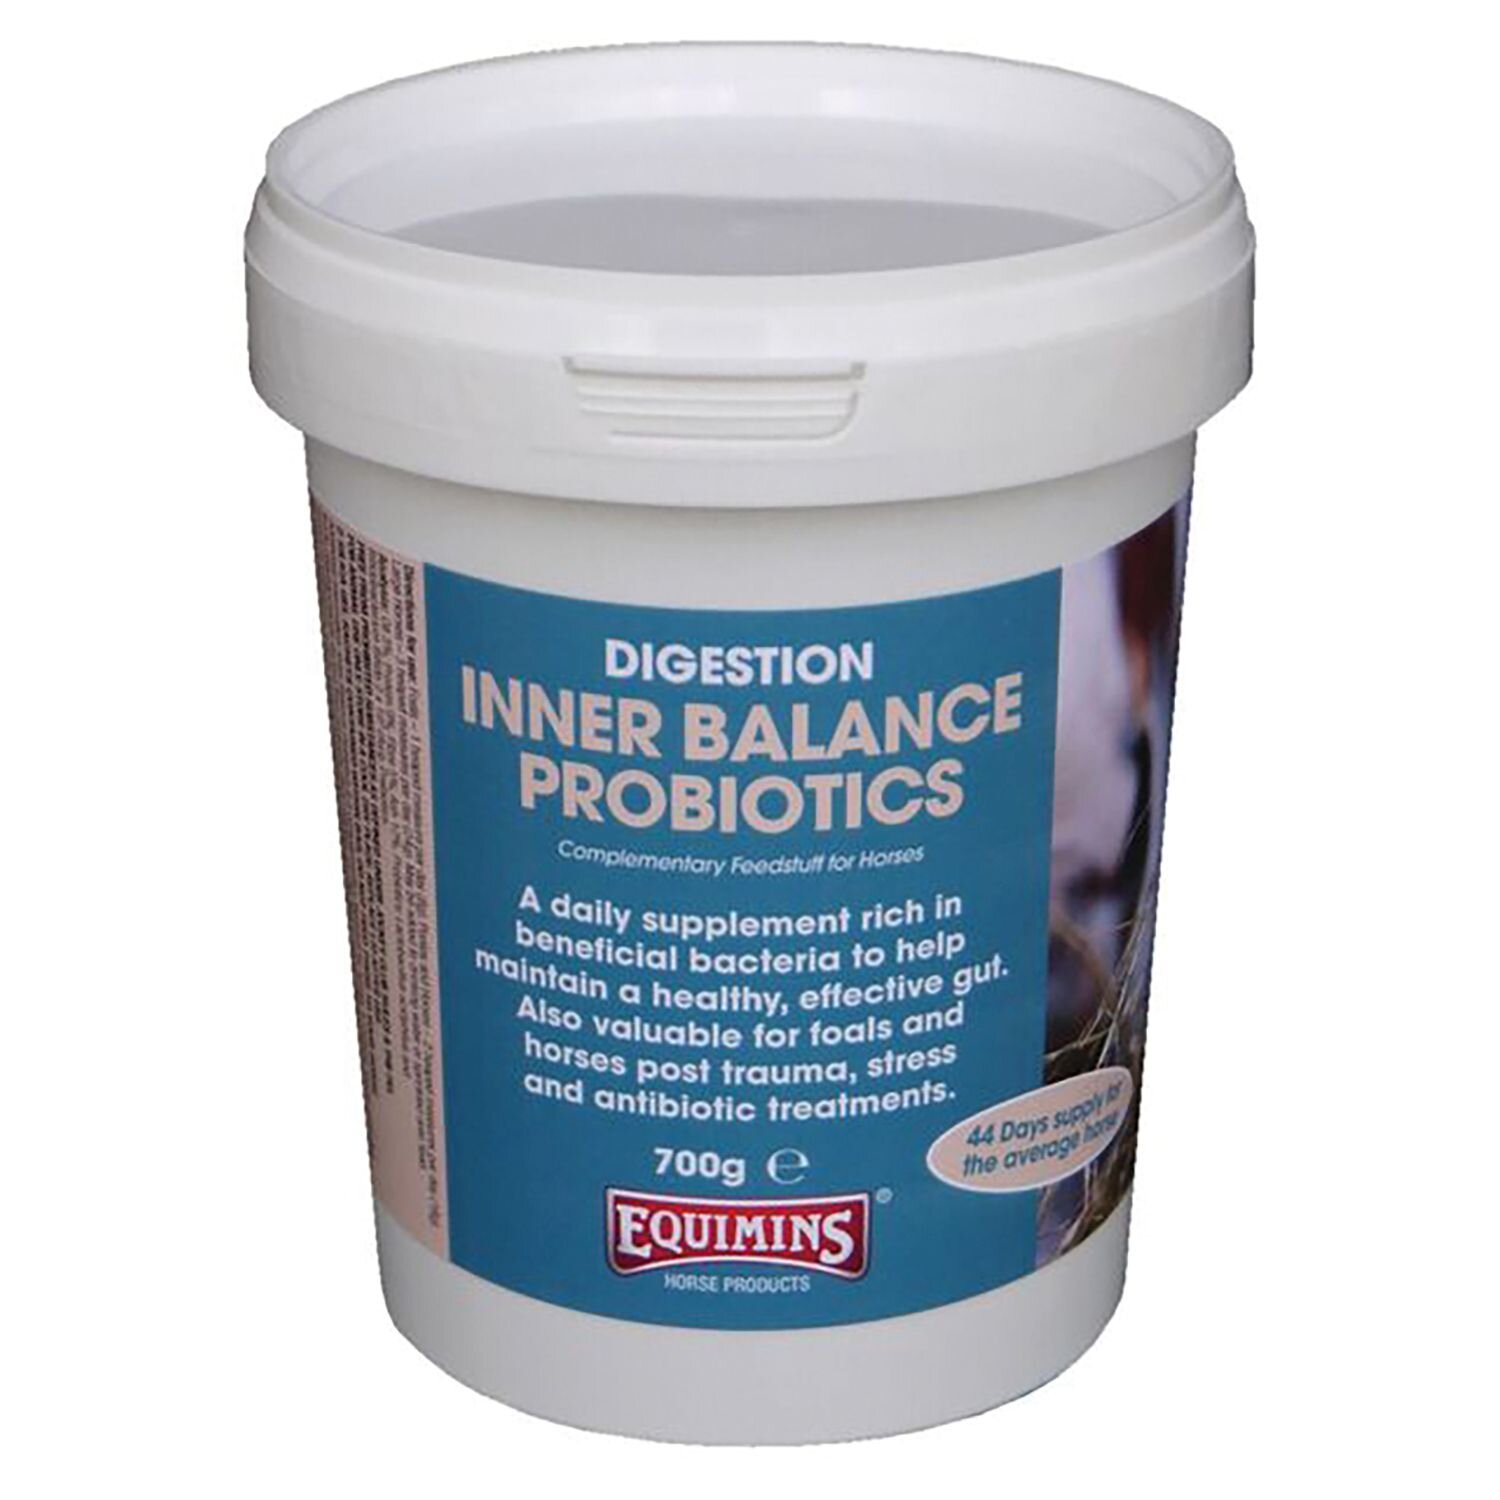 Equimins Inner Balance Probiotics - 700 Gm Tub [572]